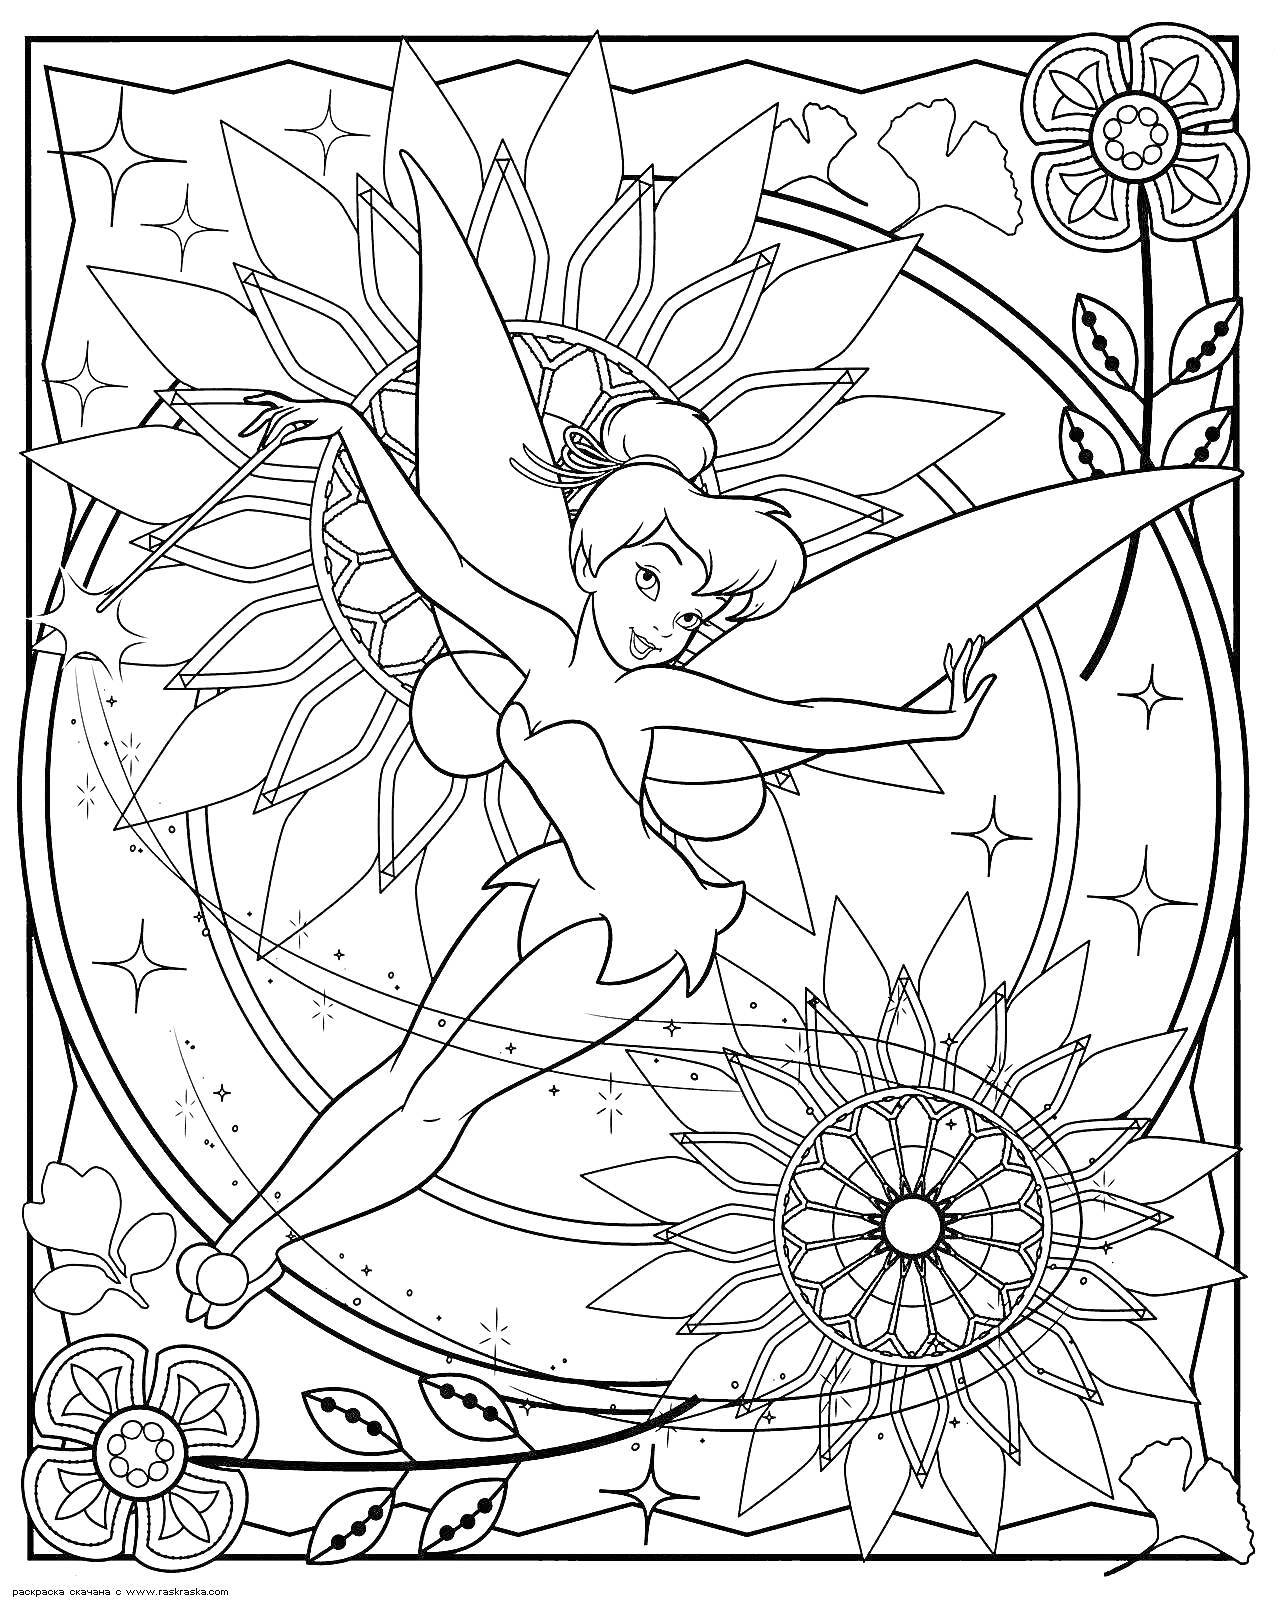 Раскраска Фея в окружении цветов и звезд